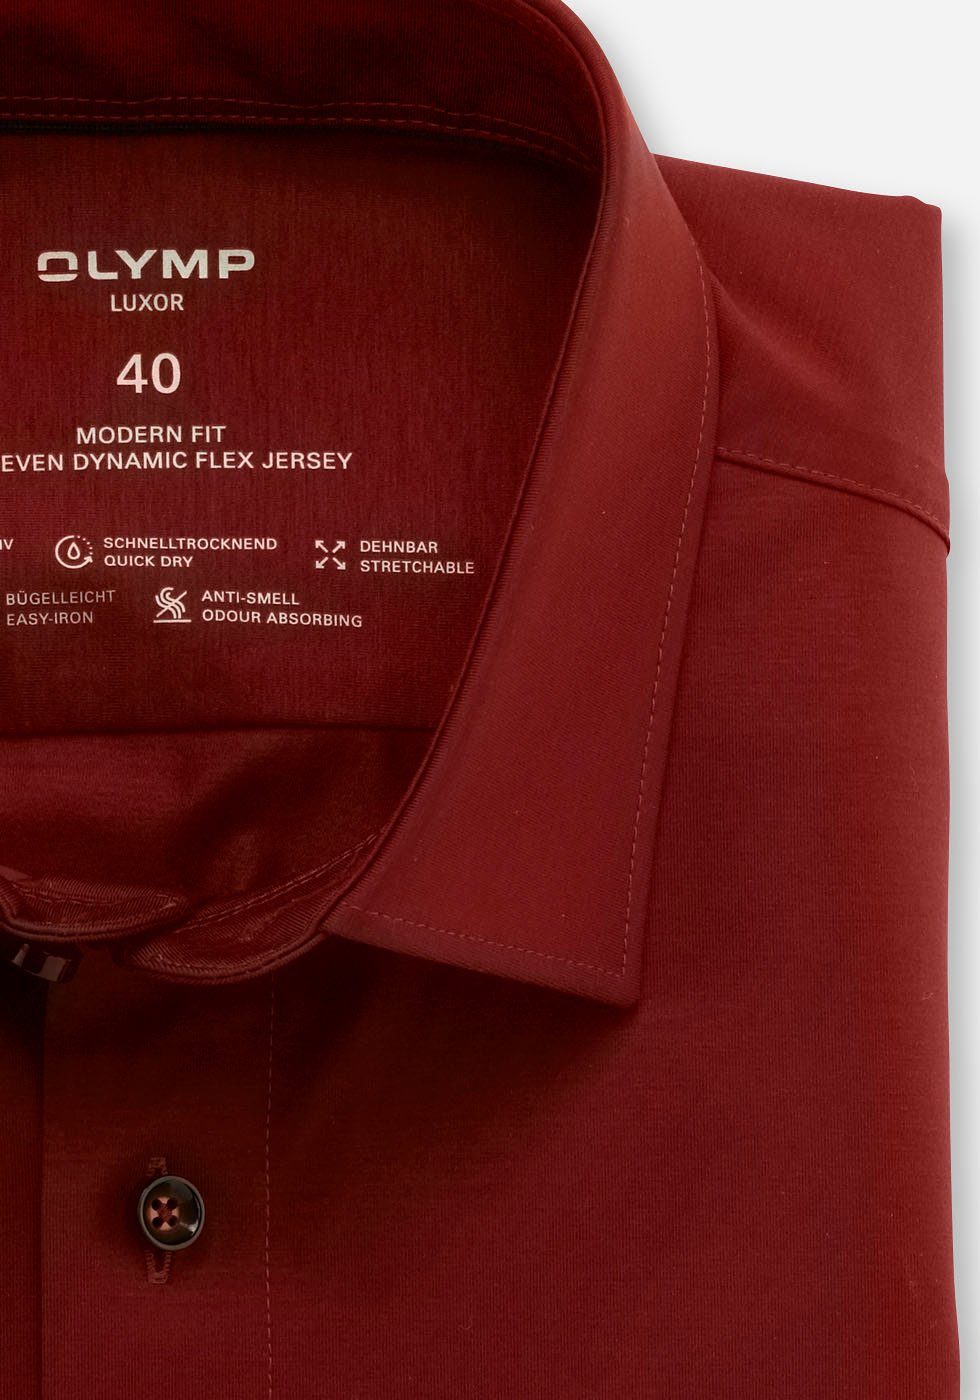 OLYMP Businesshemd Luxor in 33 modern fit Jersey-Qualität ziegelrot